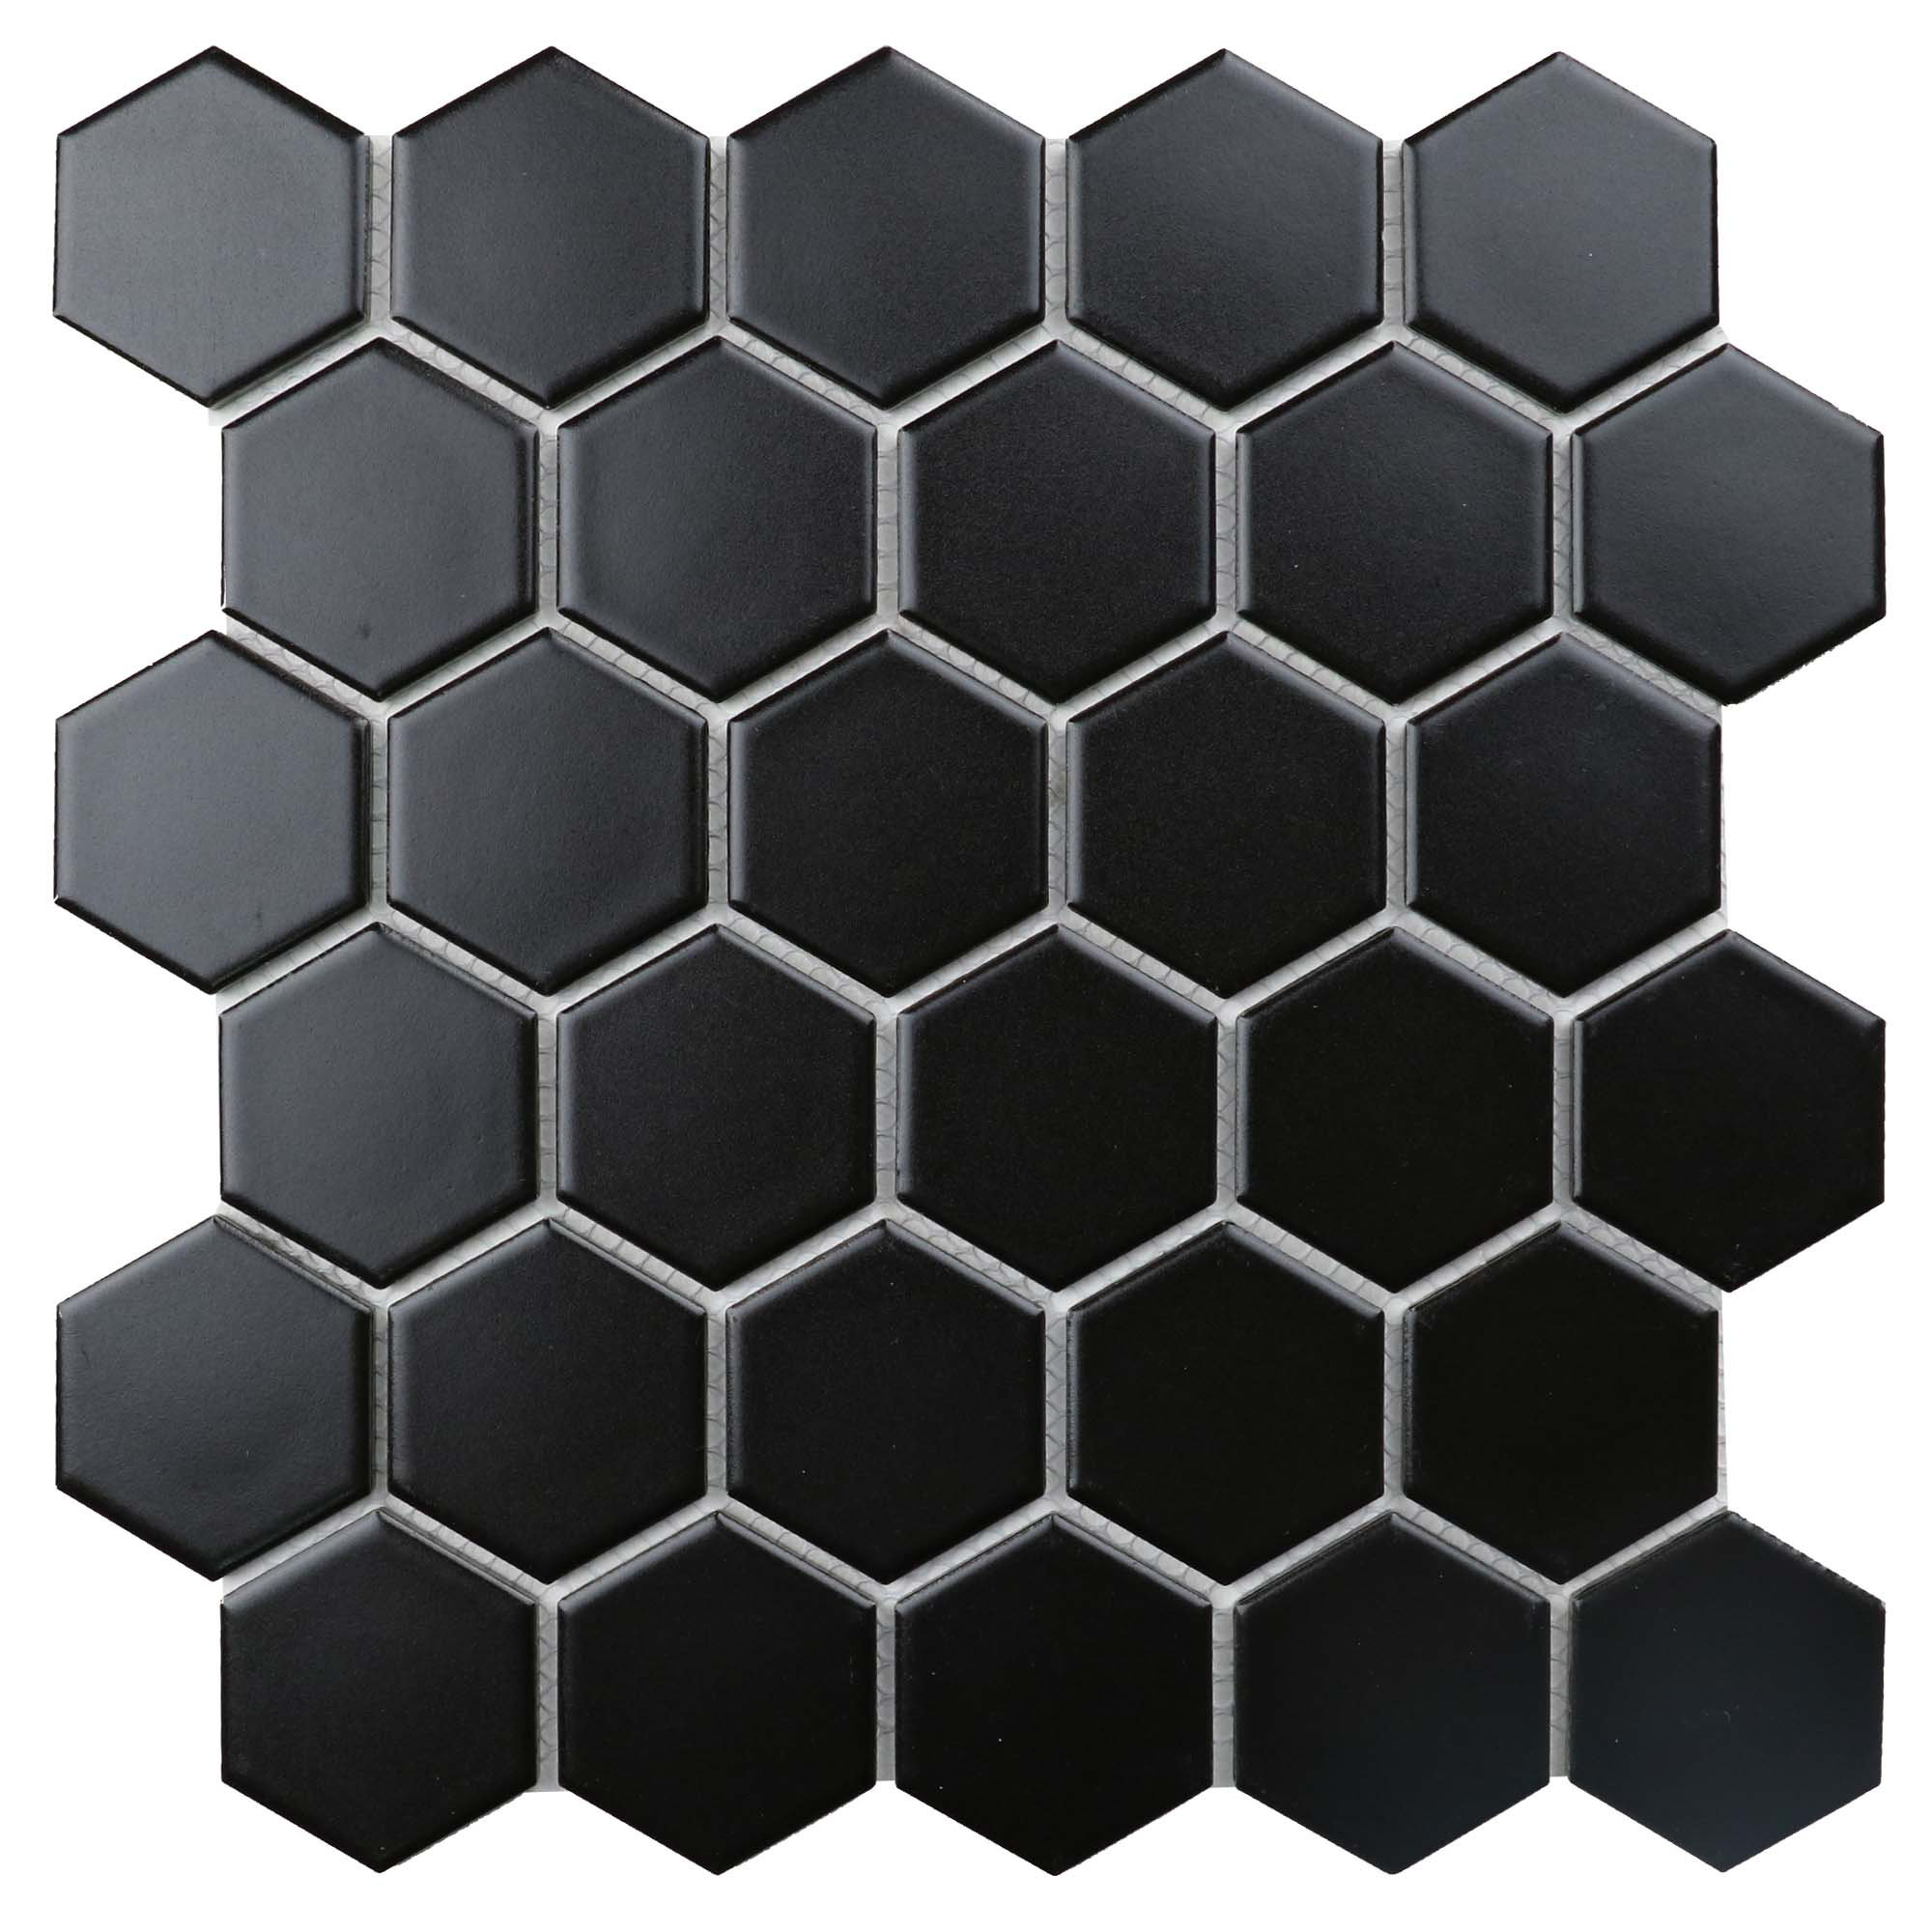 9.3 Sq Ft Box 2 Inch Black and White Ceramic Hexagon Mosaic Tiles 